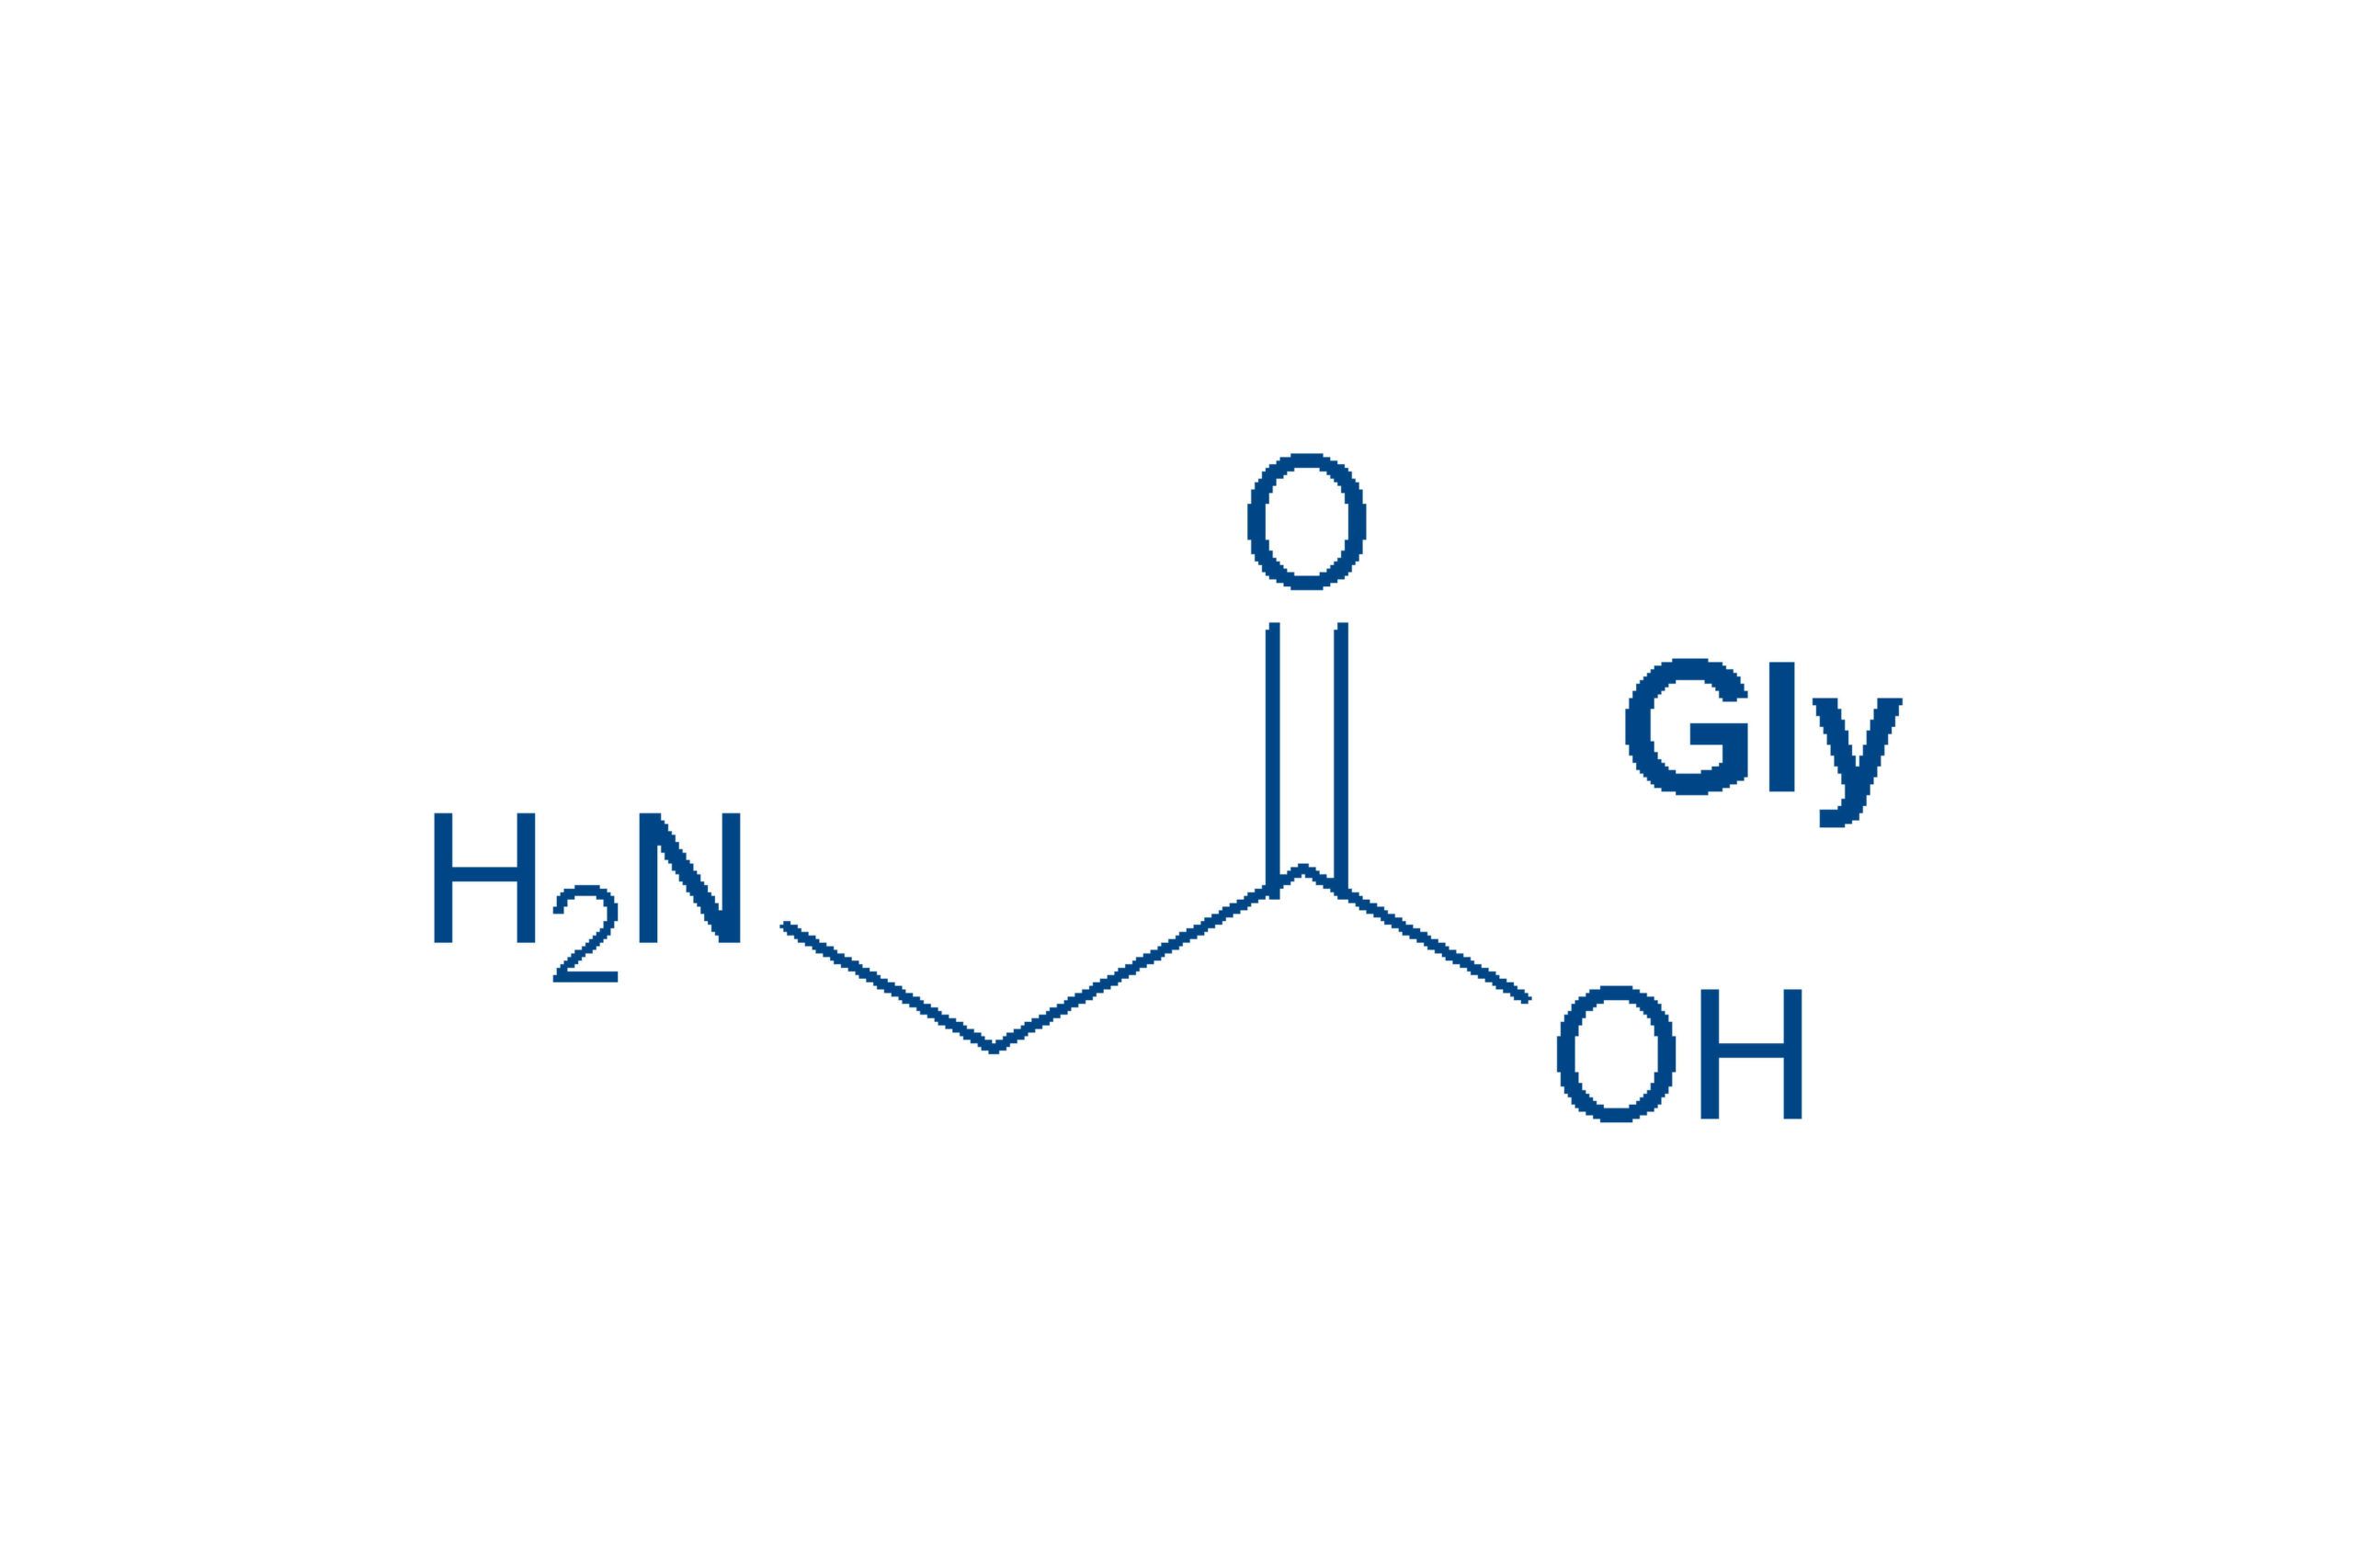 Glycine structure